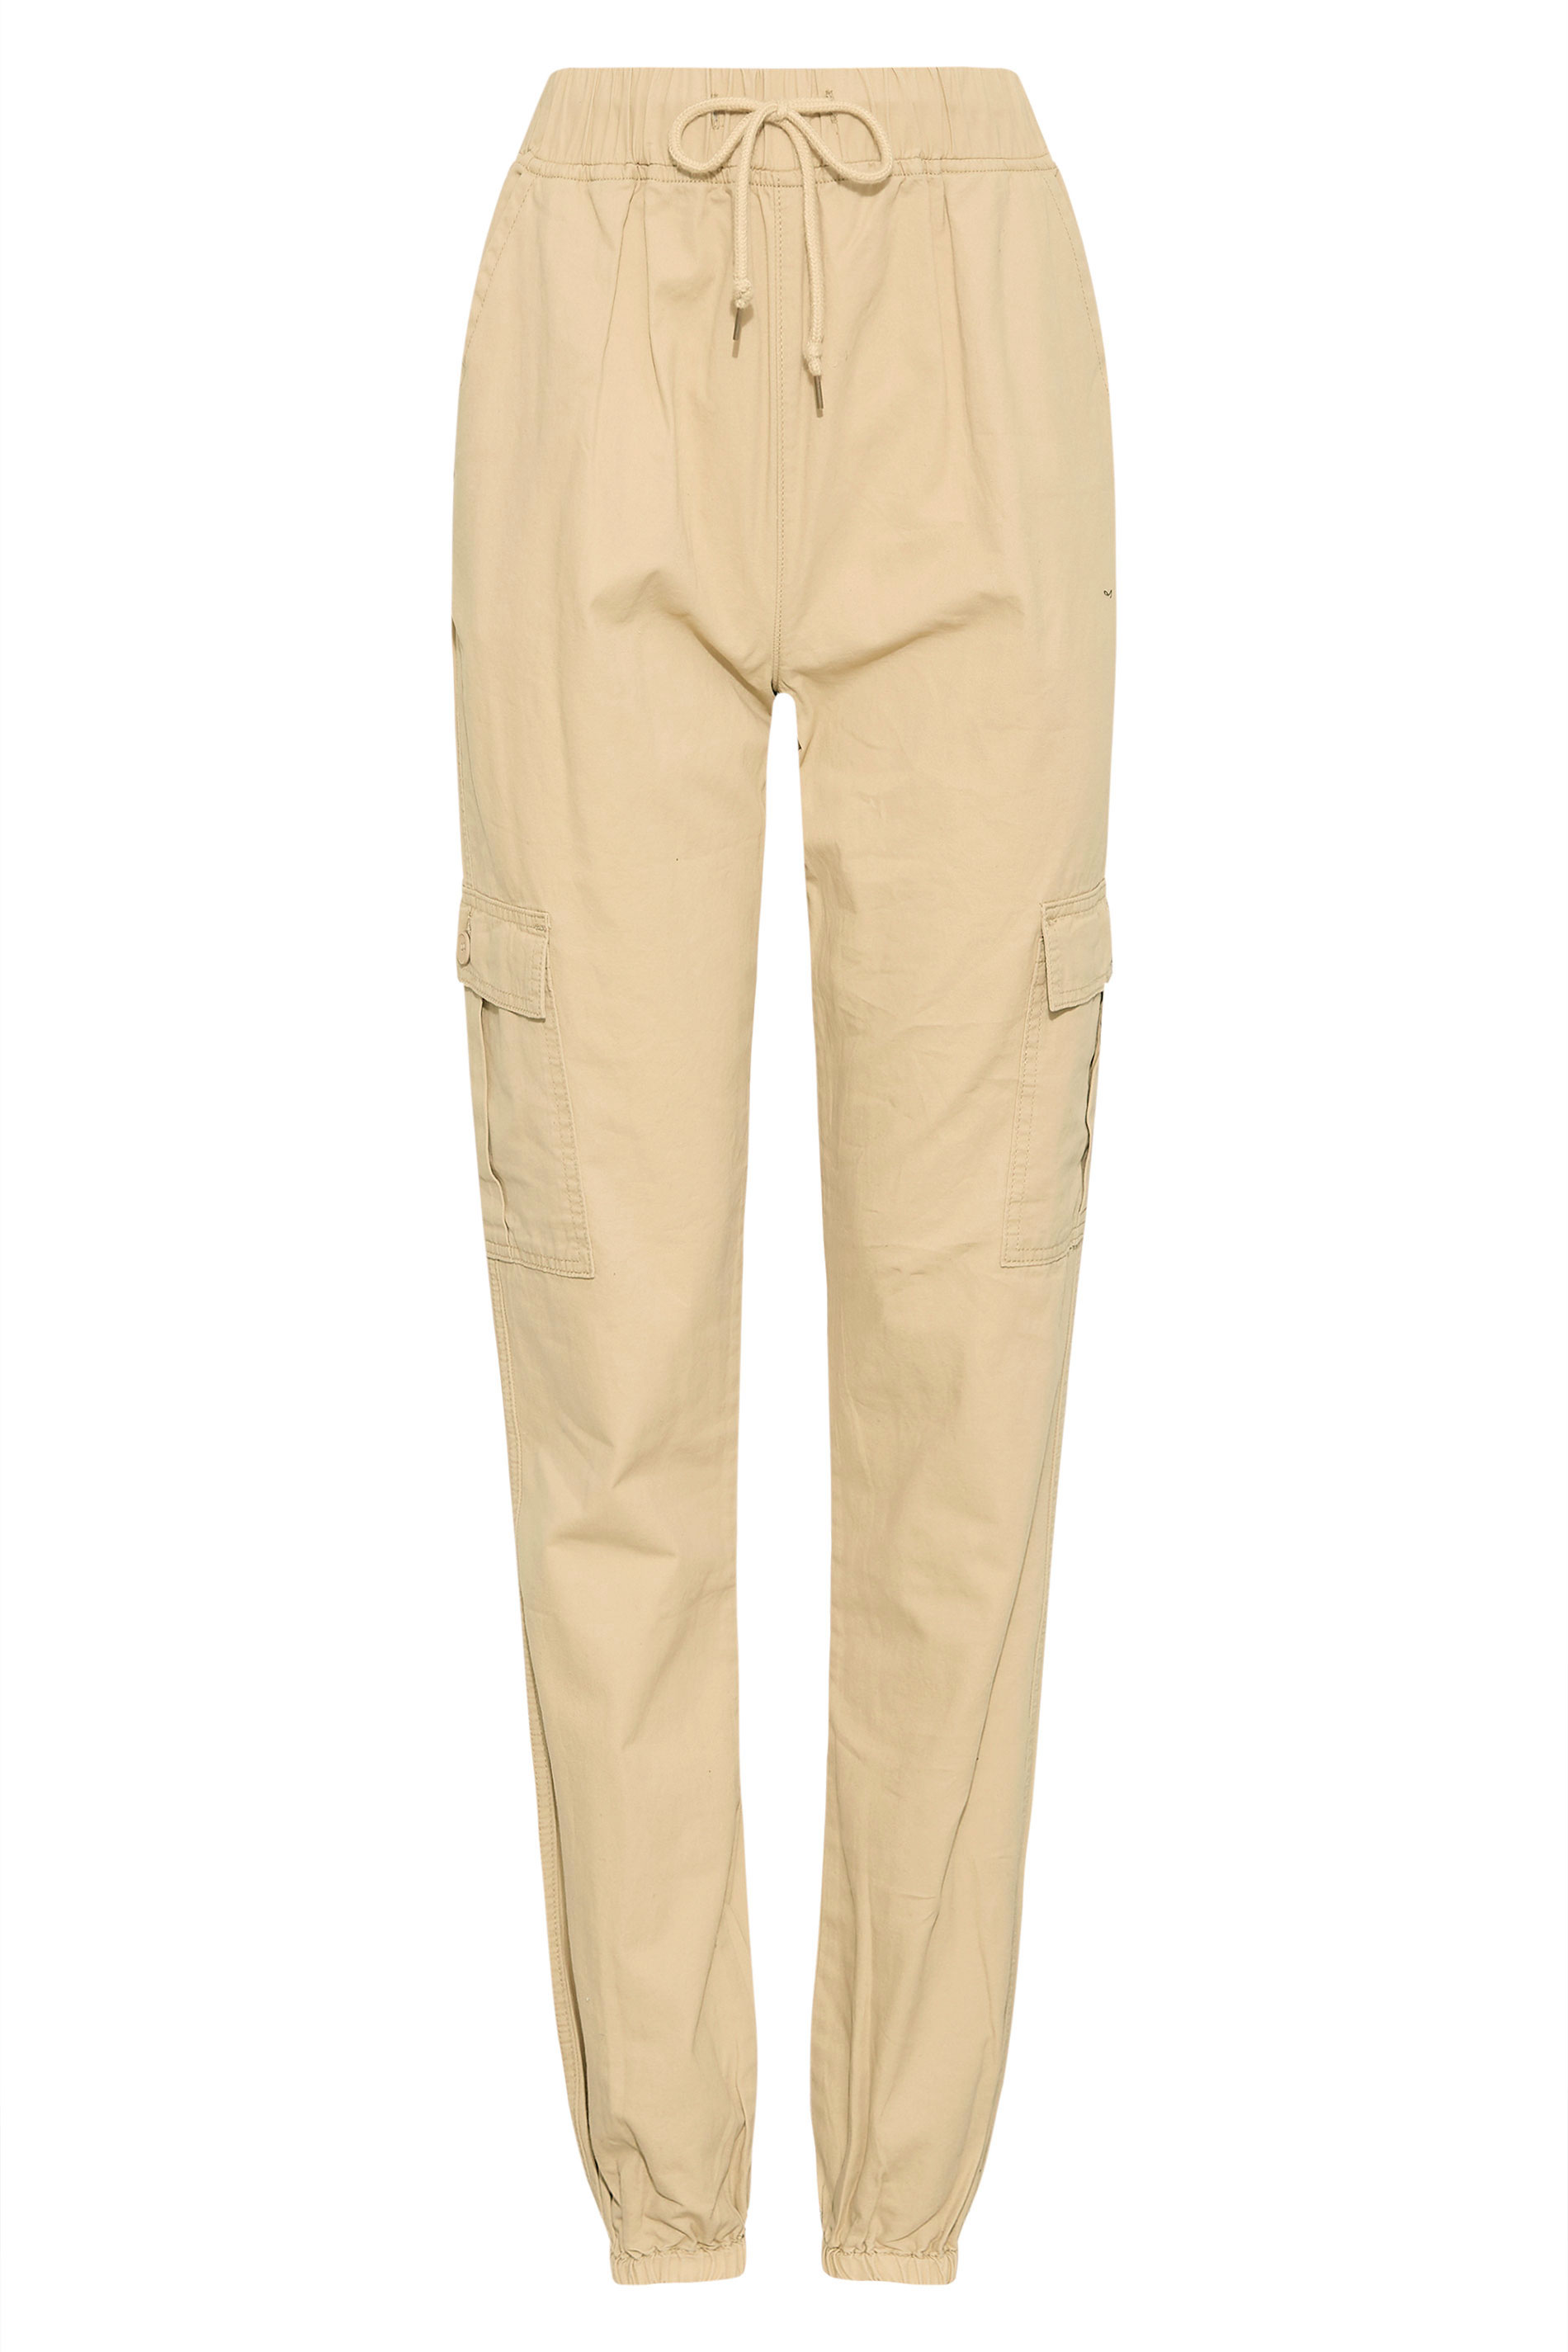 LTS Tall Women's Beige Brown Cargo Pocket Twill Trousers | Long Tall Sally 3